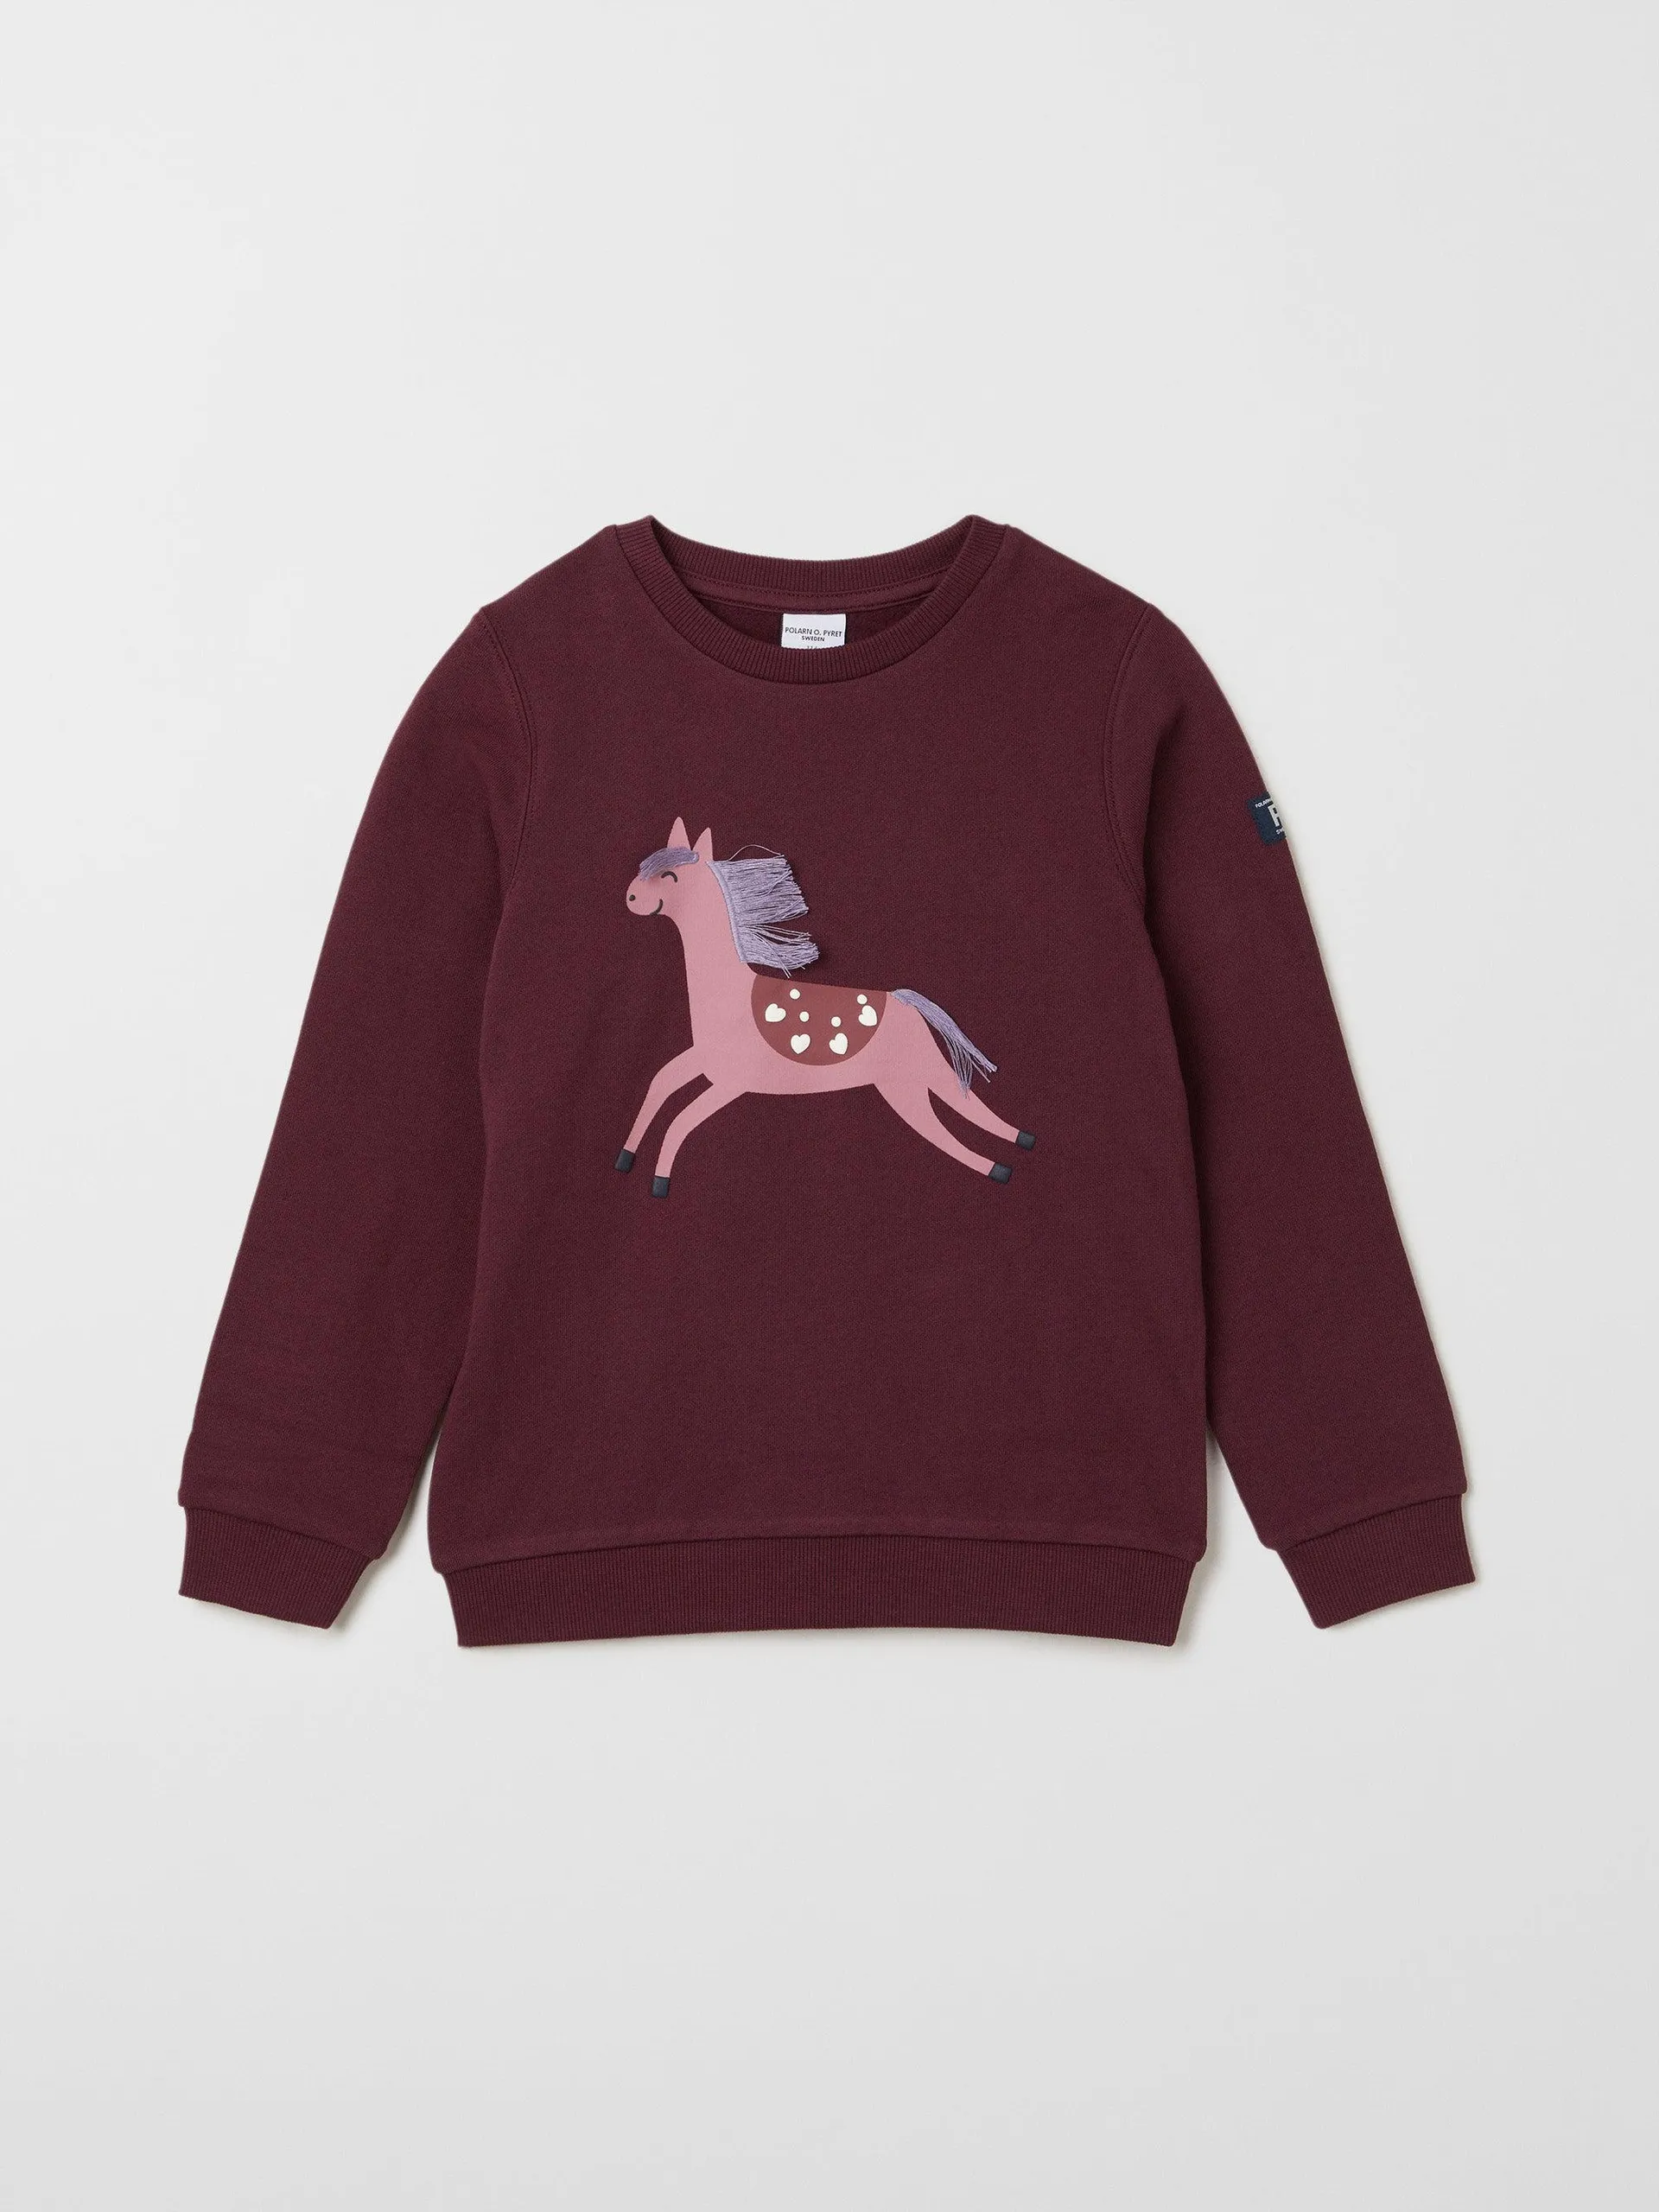 Horse Print Kids Sweatshirt